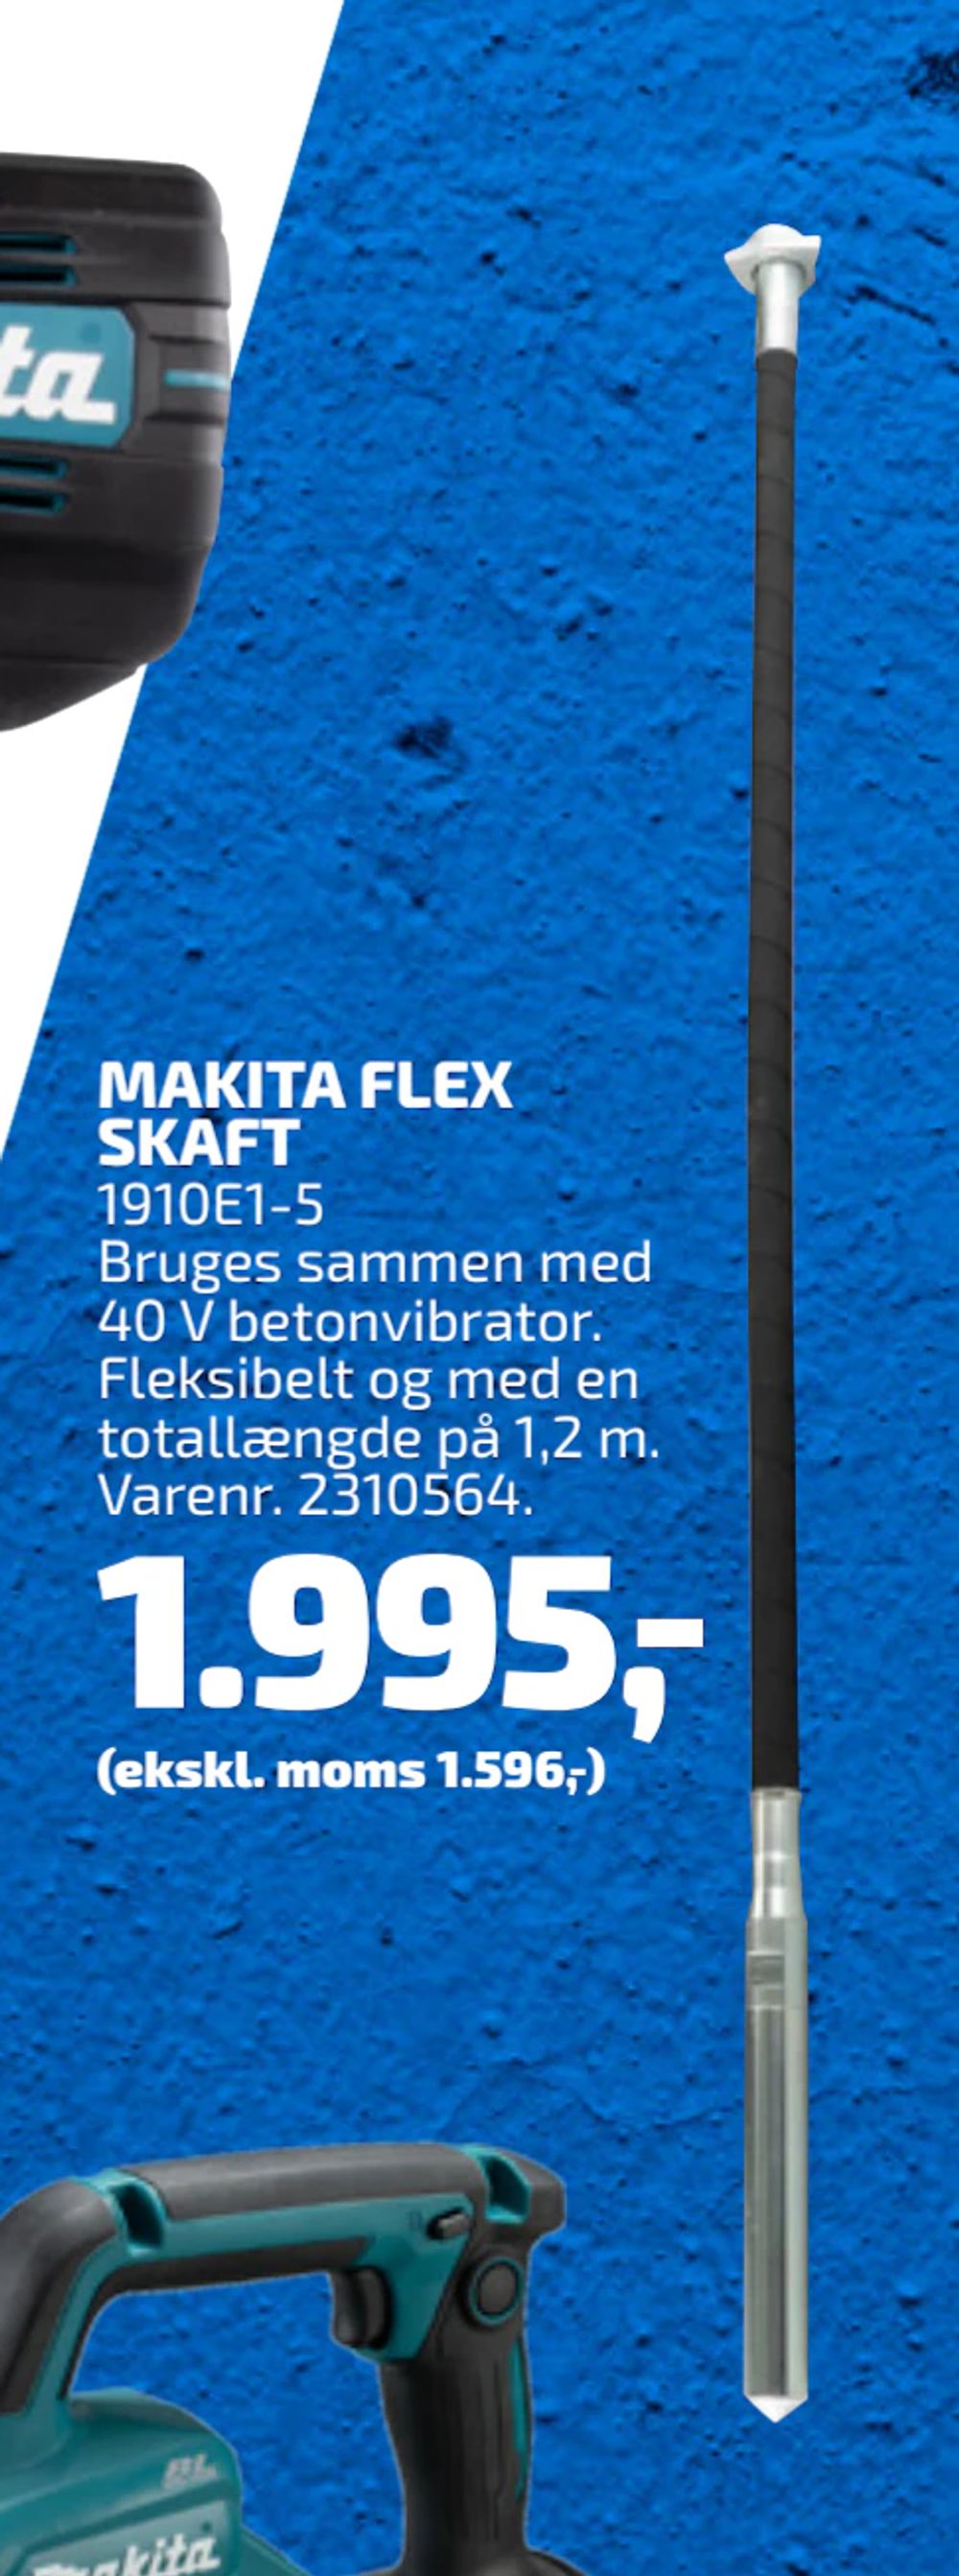 Tilbud på MAKITA FLEX SKAFT fra Davidsen til 1.995 kr.